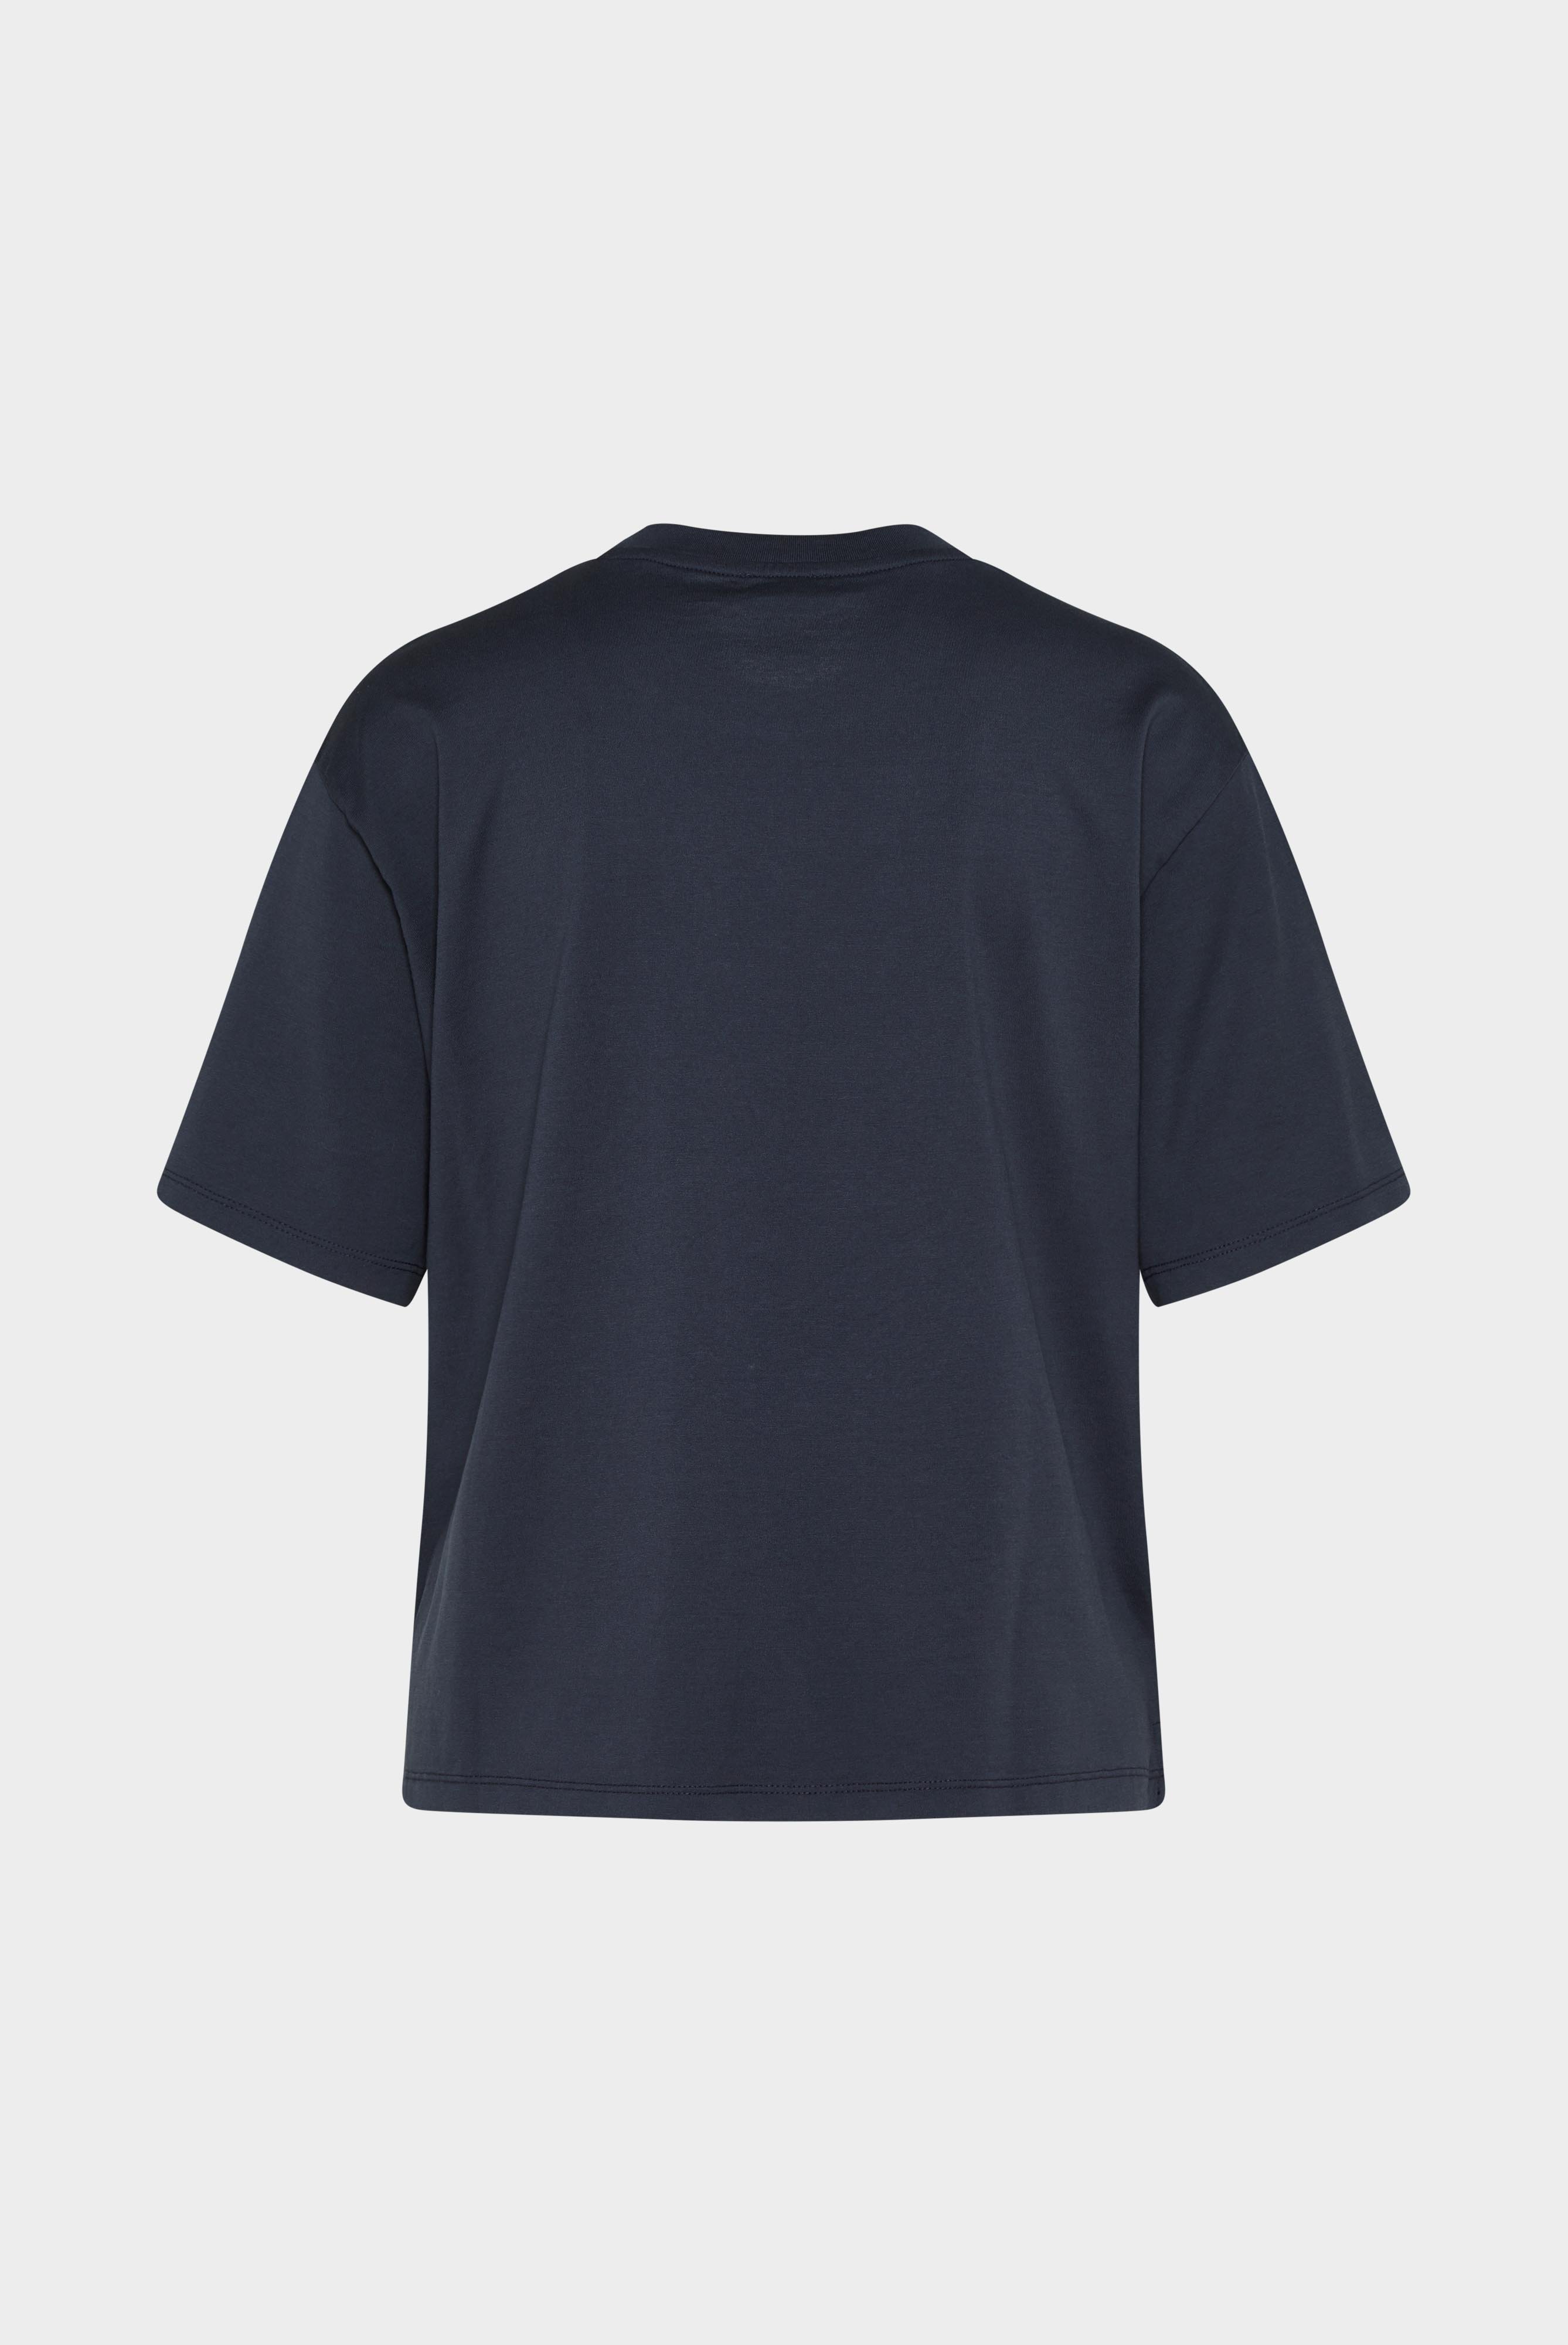 Tops & T-Shirts+Boxy T-Shirt+05.2912..Z20044.790.M